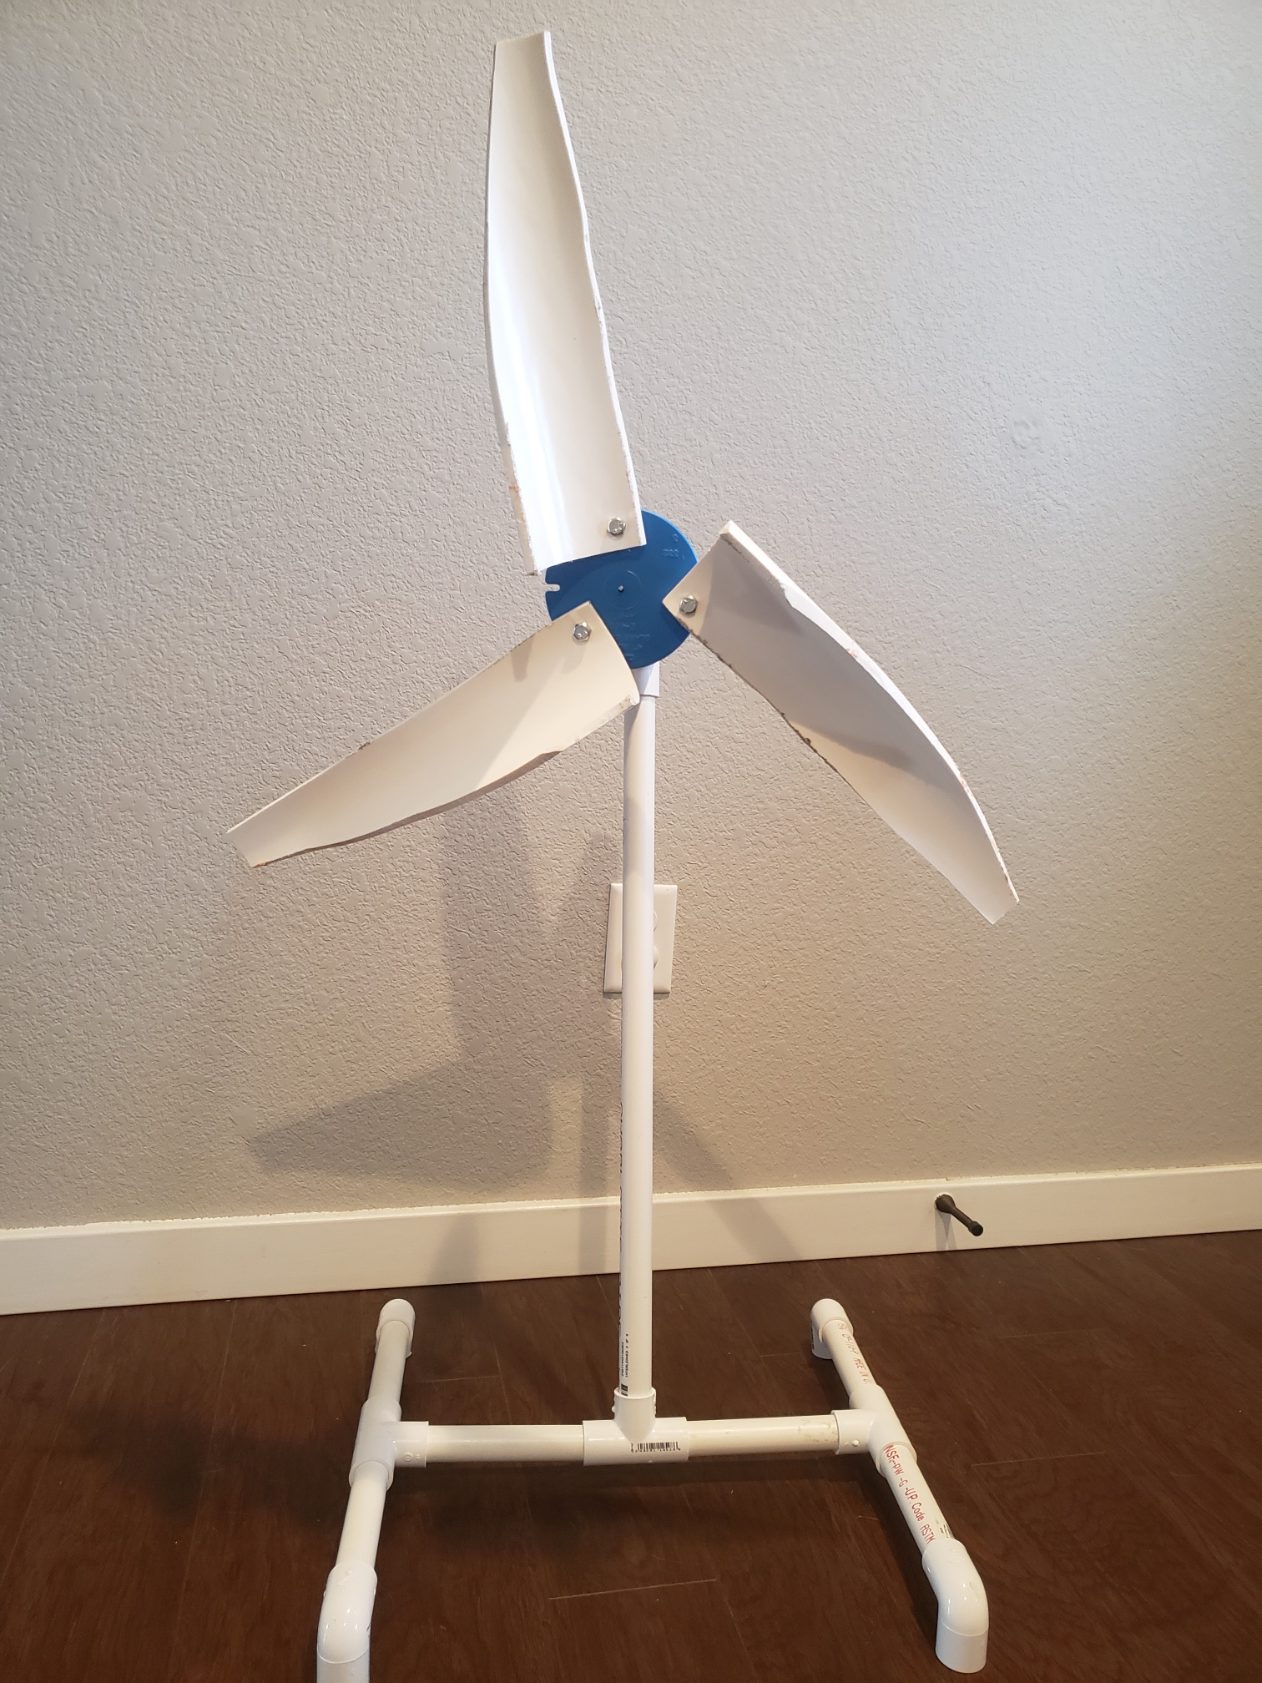 vertical wind turbine blade design